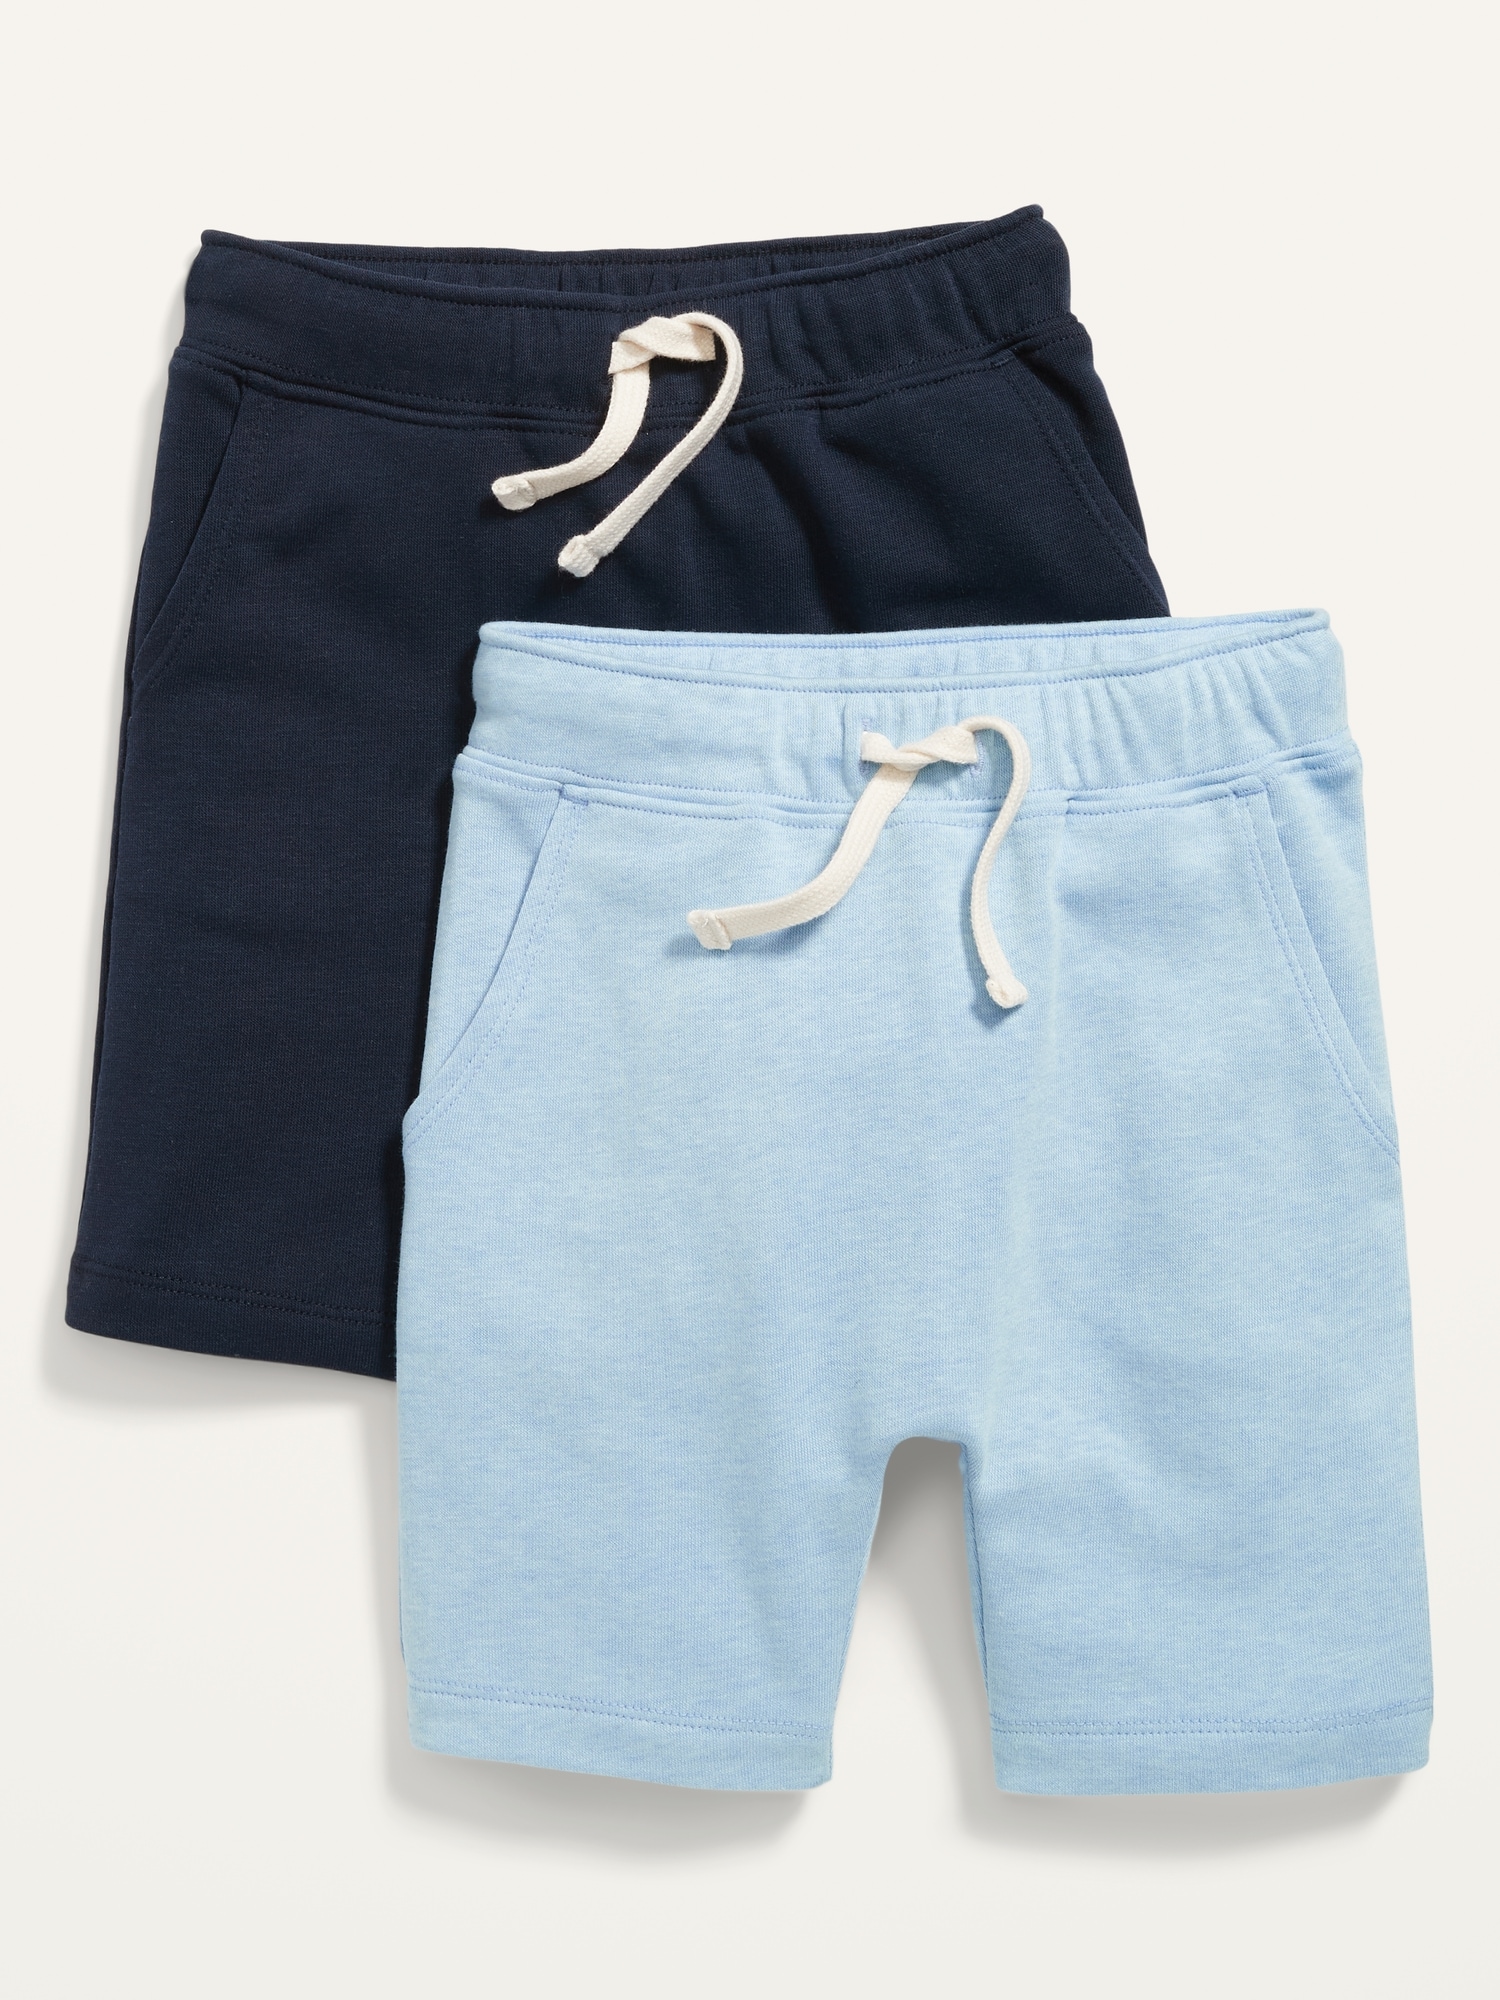 Old Navy 2-Pack Functional Drawstring U-Shaped Shorts for Toddler Boys blue. 1